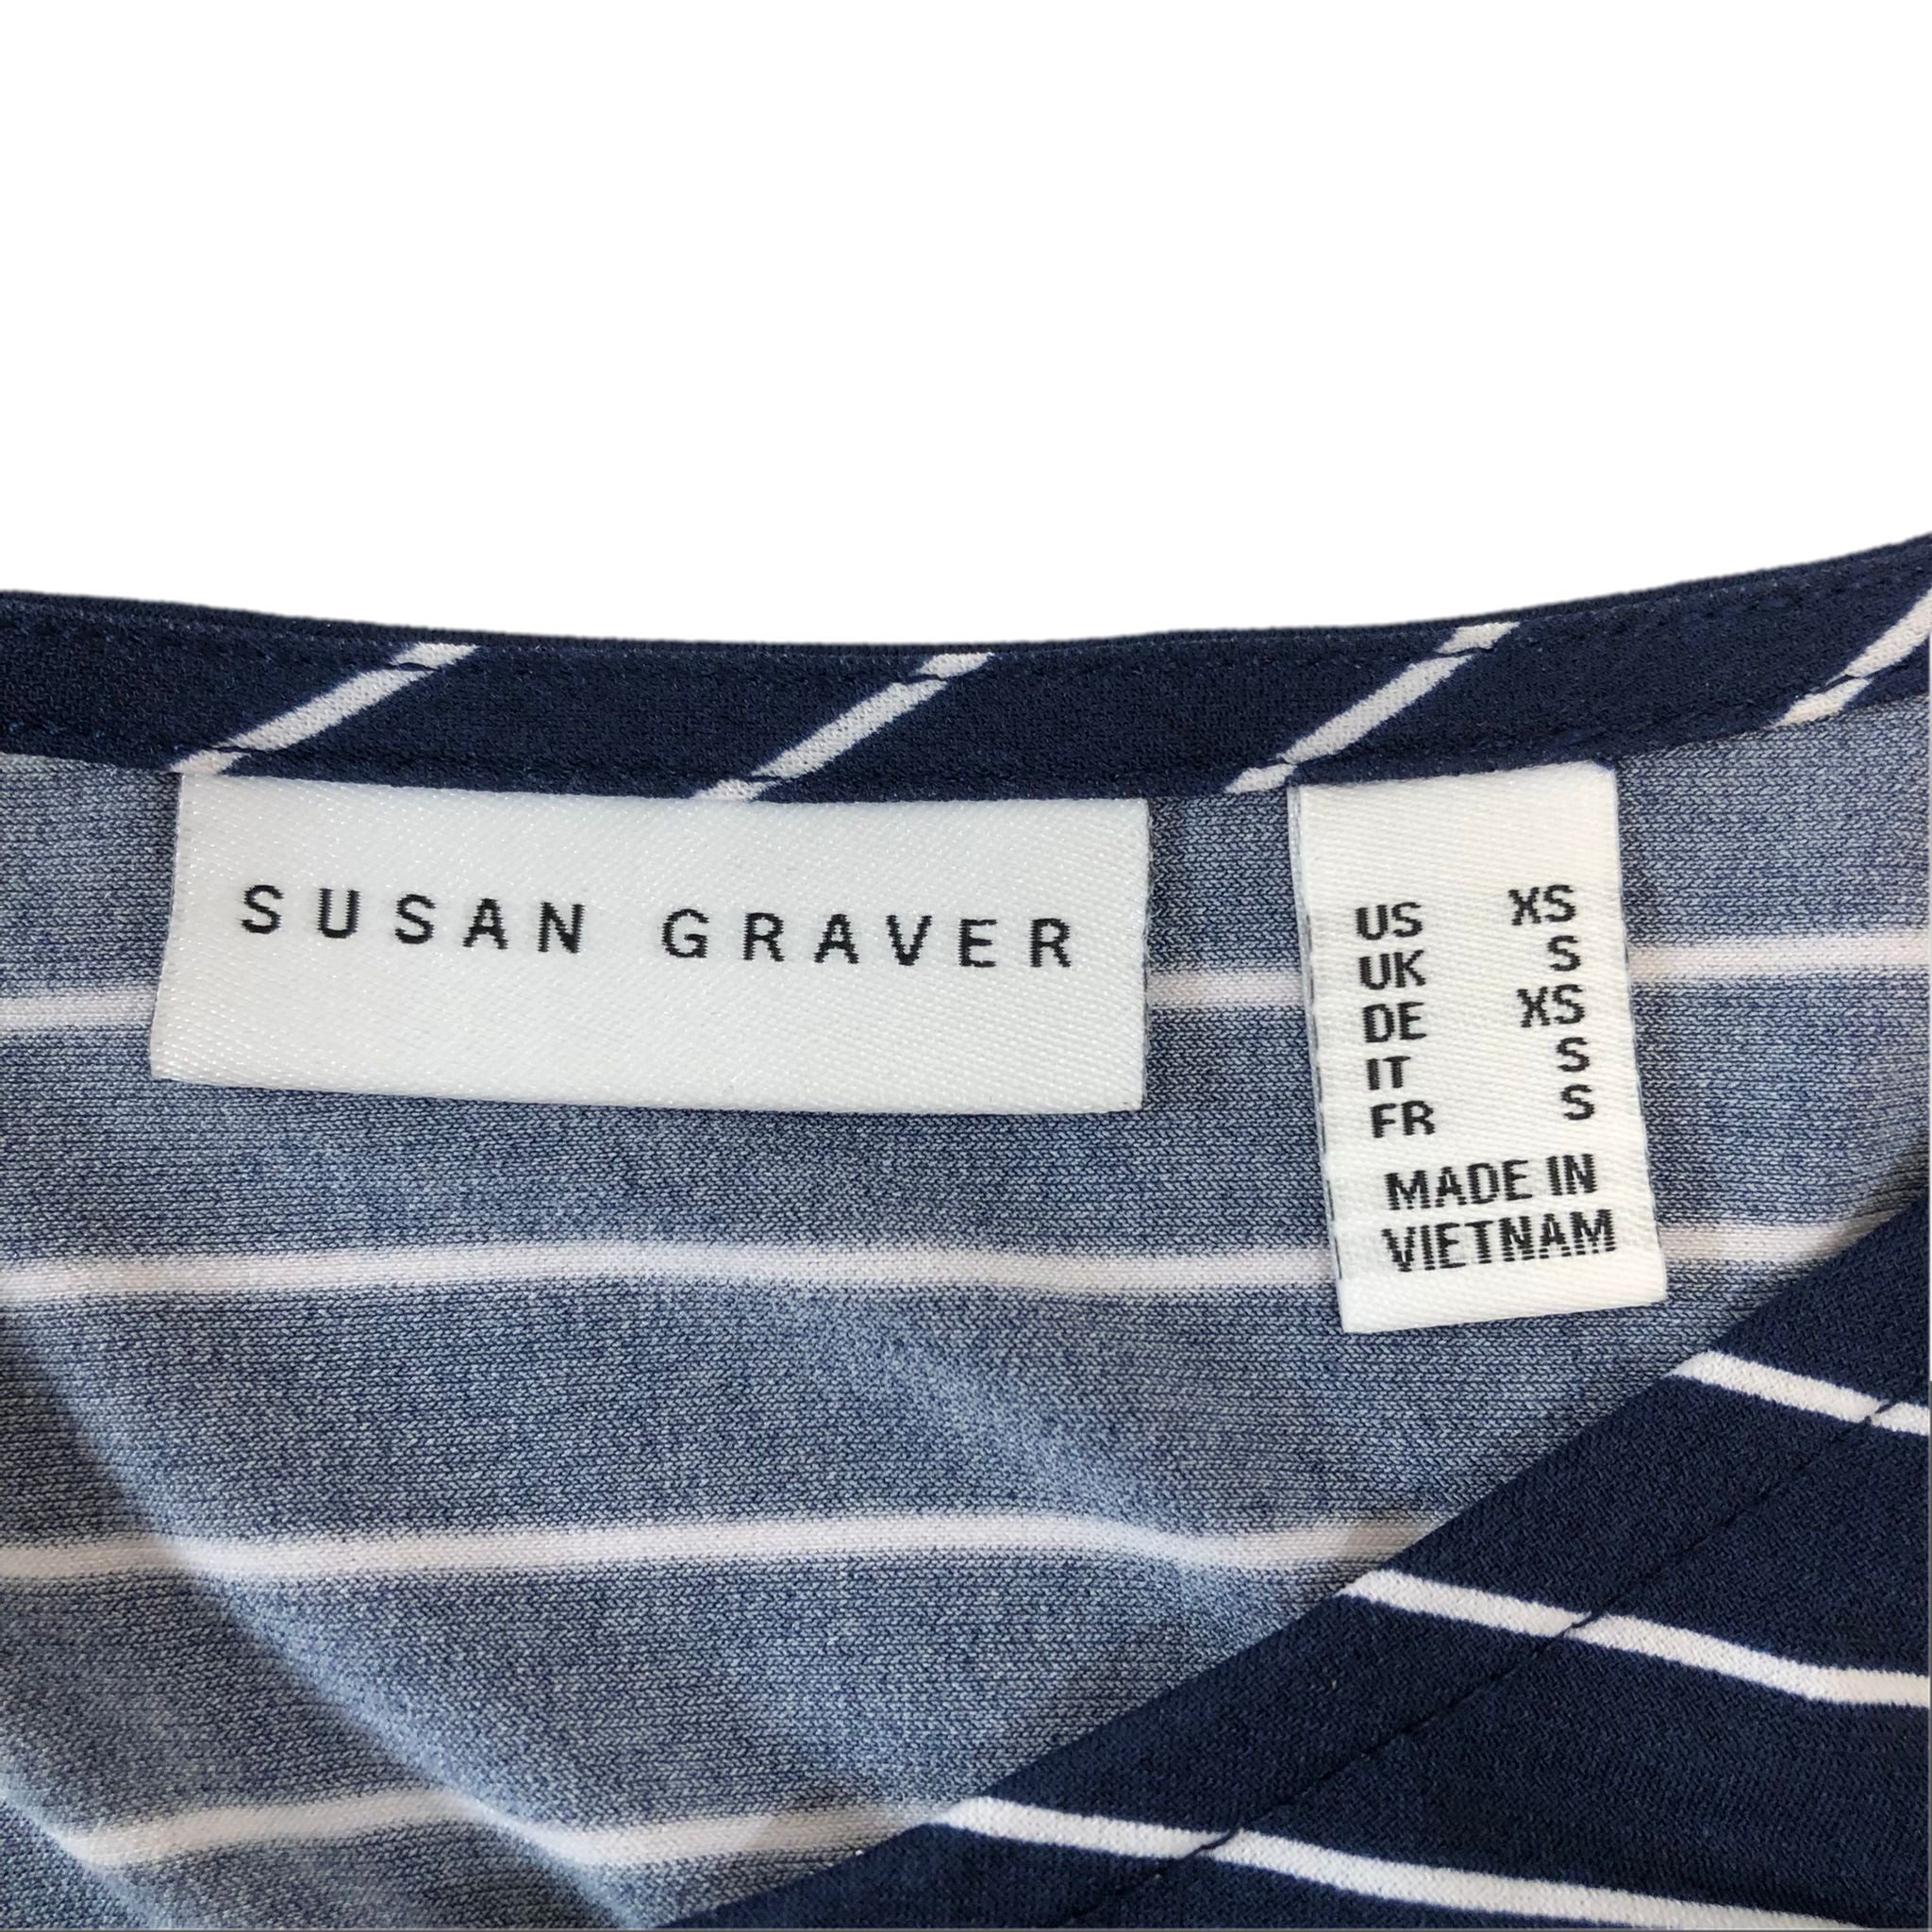 "As Is" Susan Graver Printed Liquid Knit Raglan Sleeve Top w Buttons